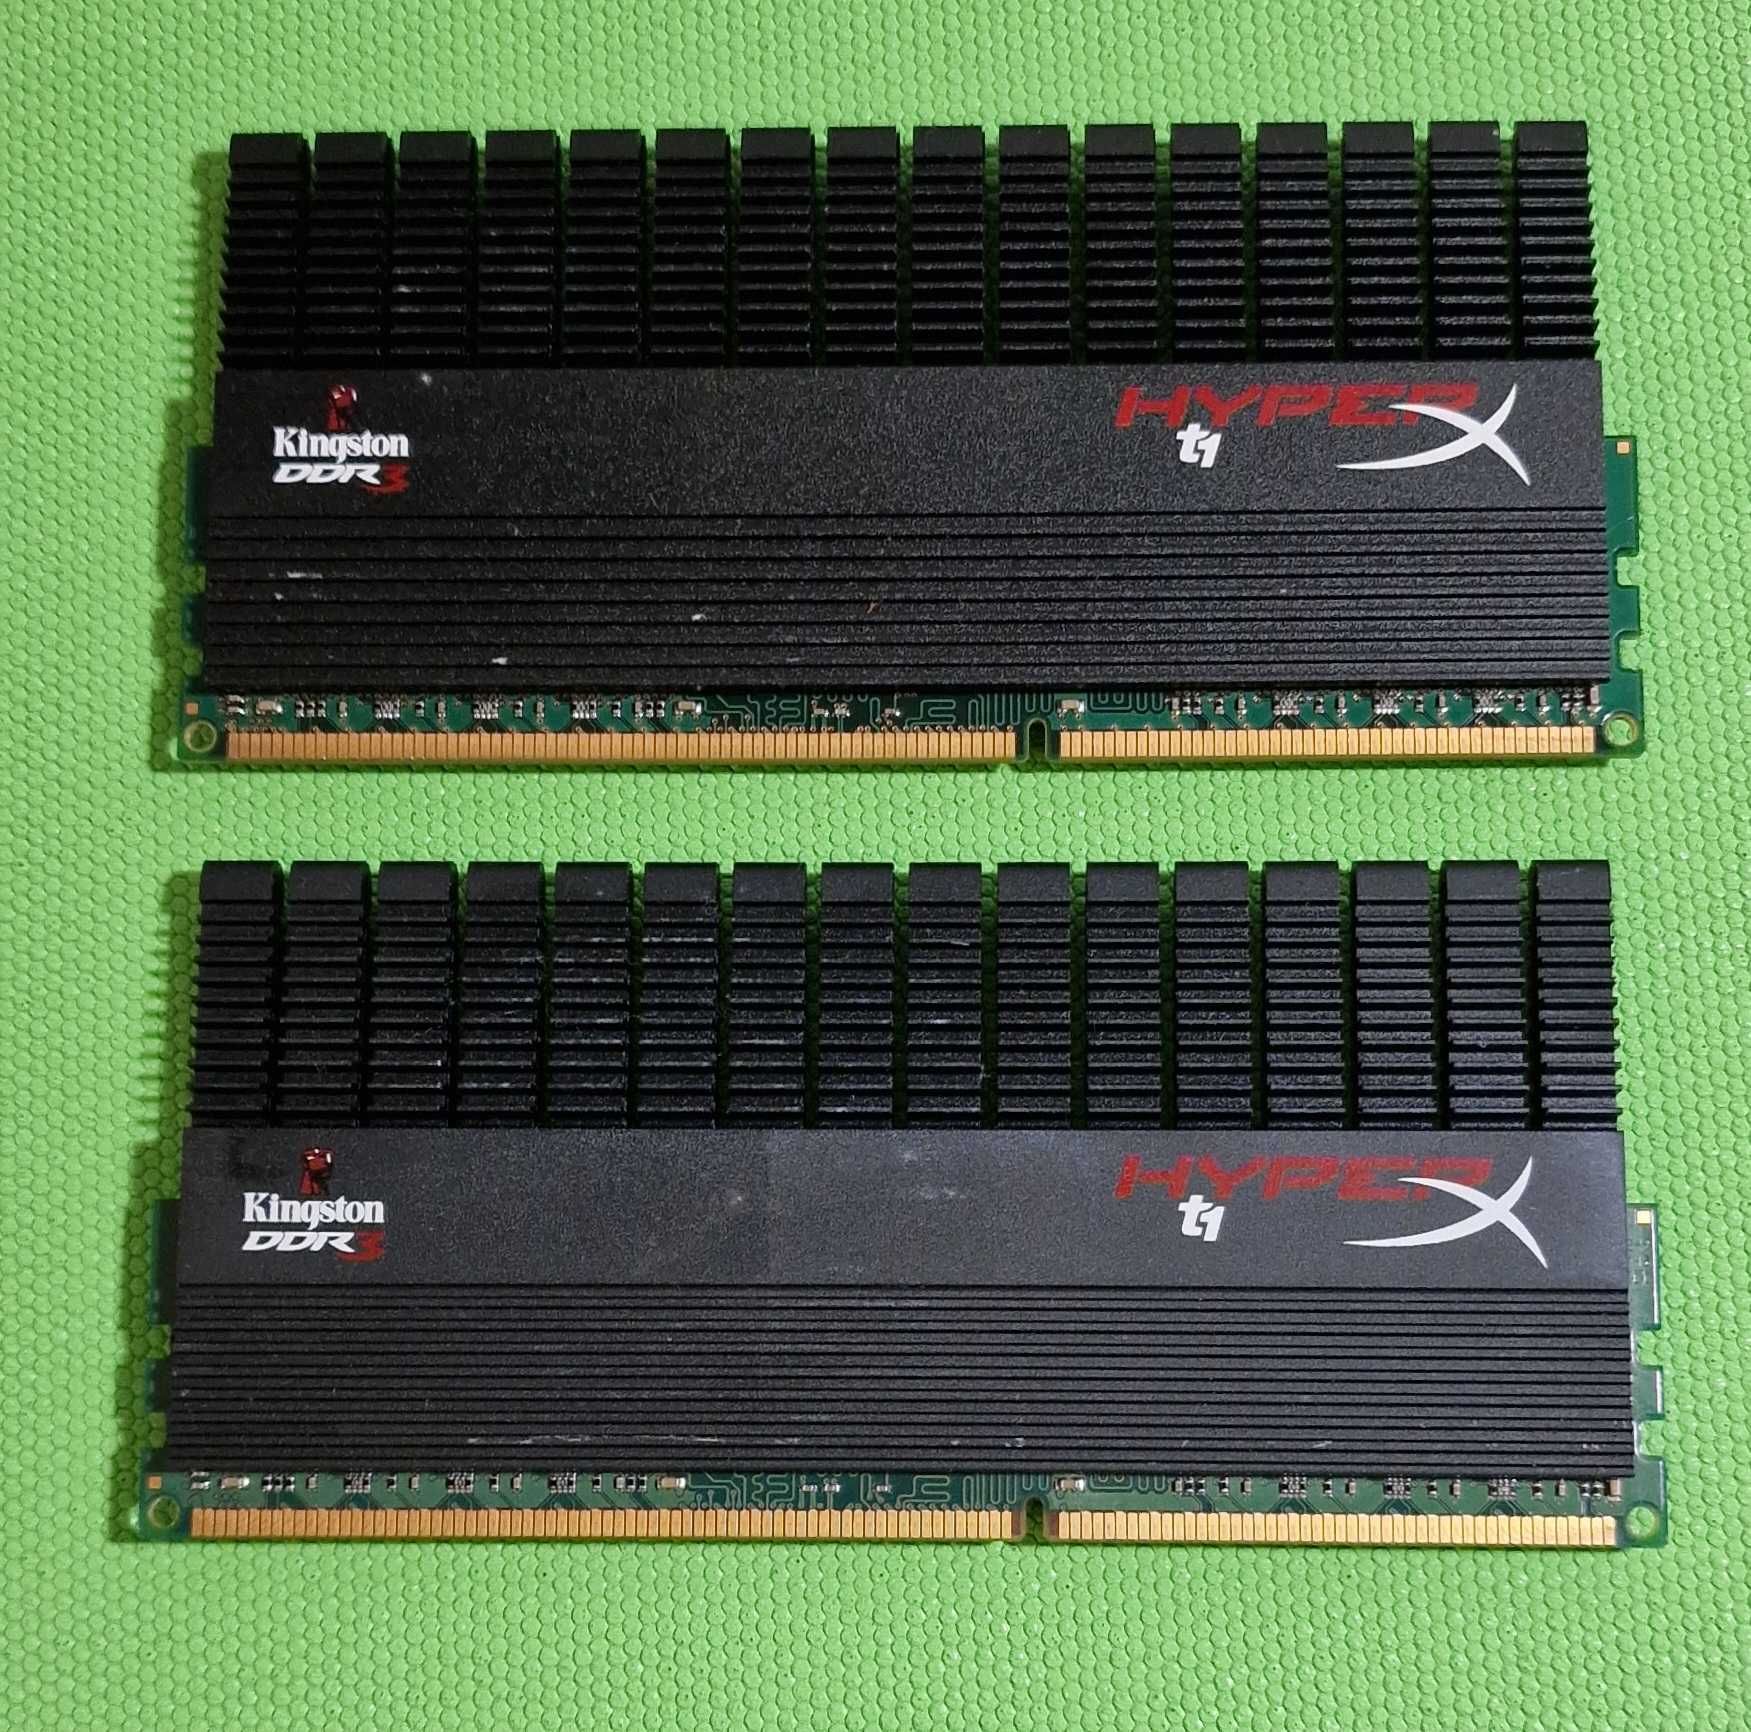 HyperX 16 GB (2x8GB) DDR3 2133 MHz (KHX21C11T1BK2/16X)